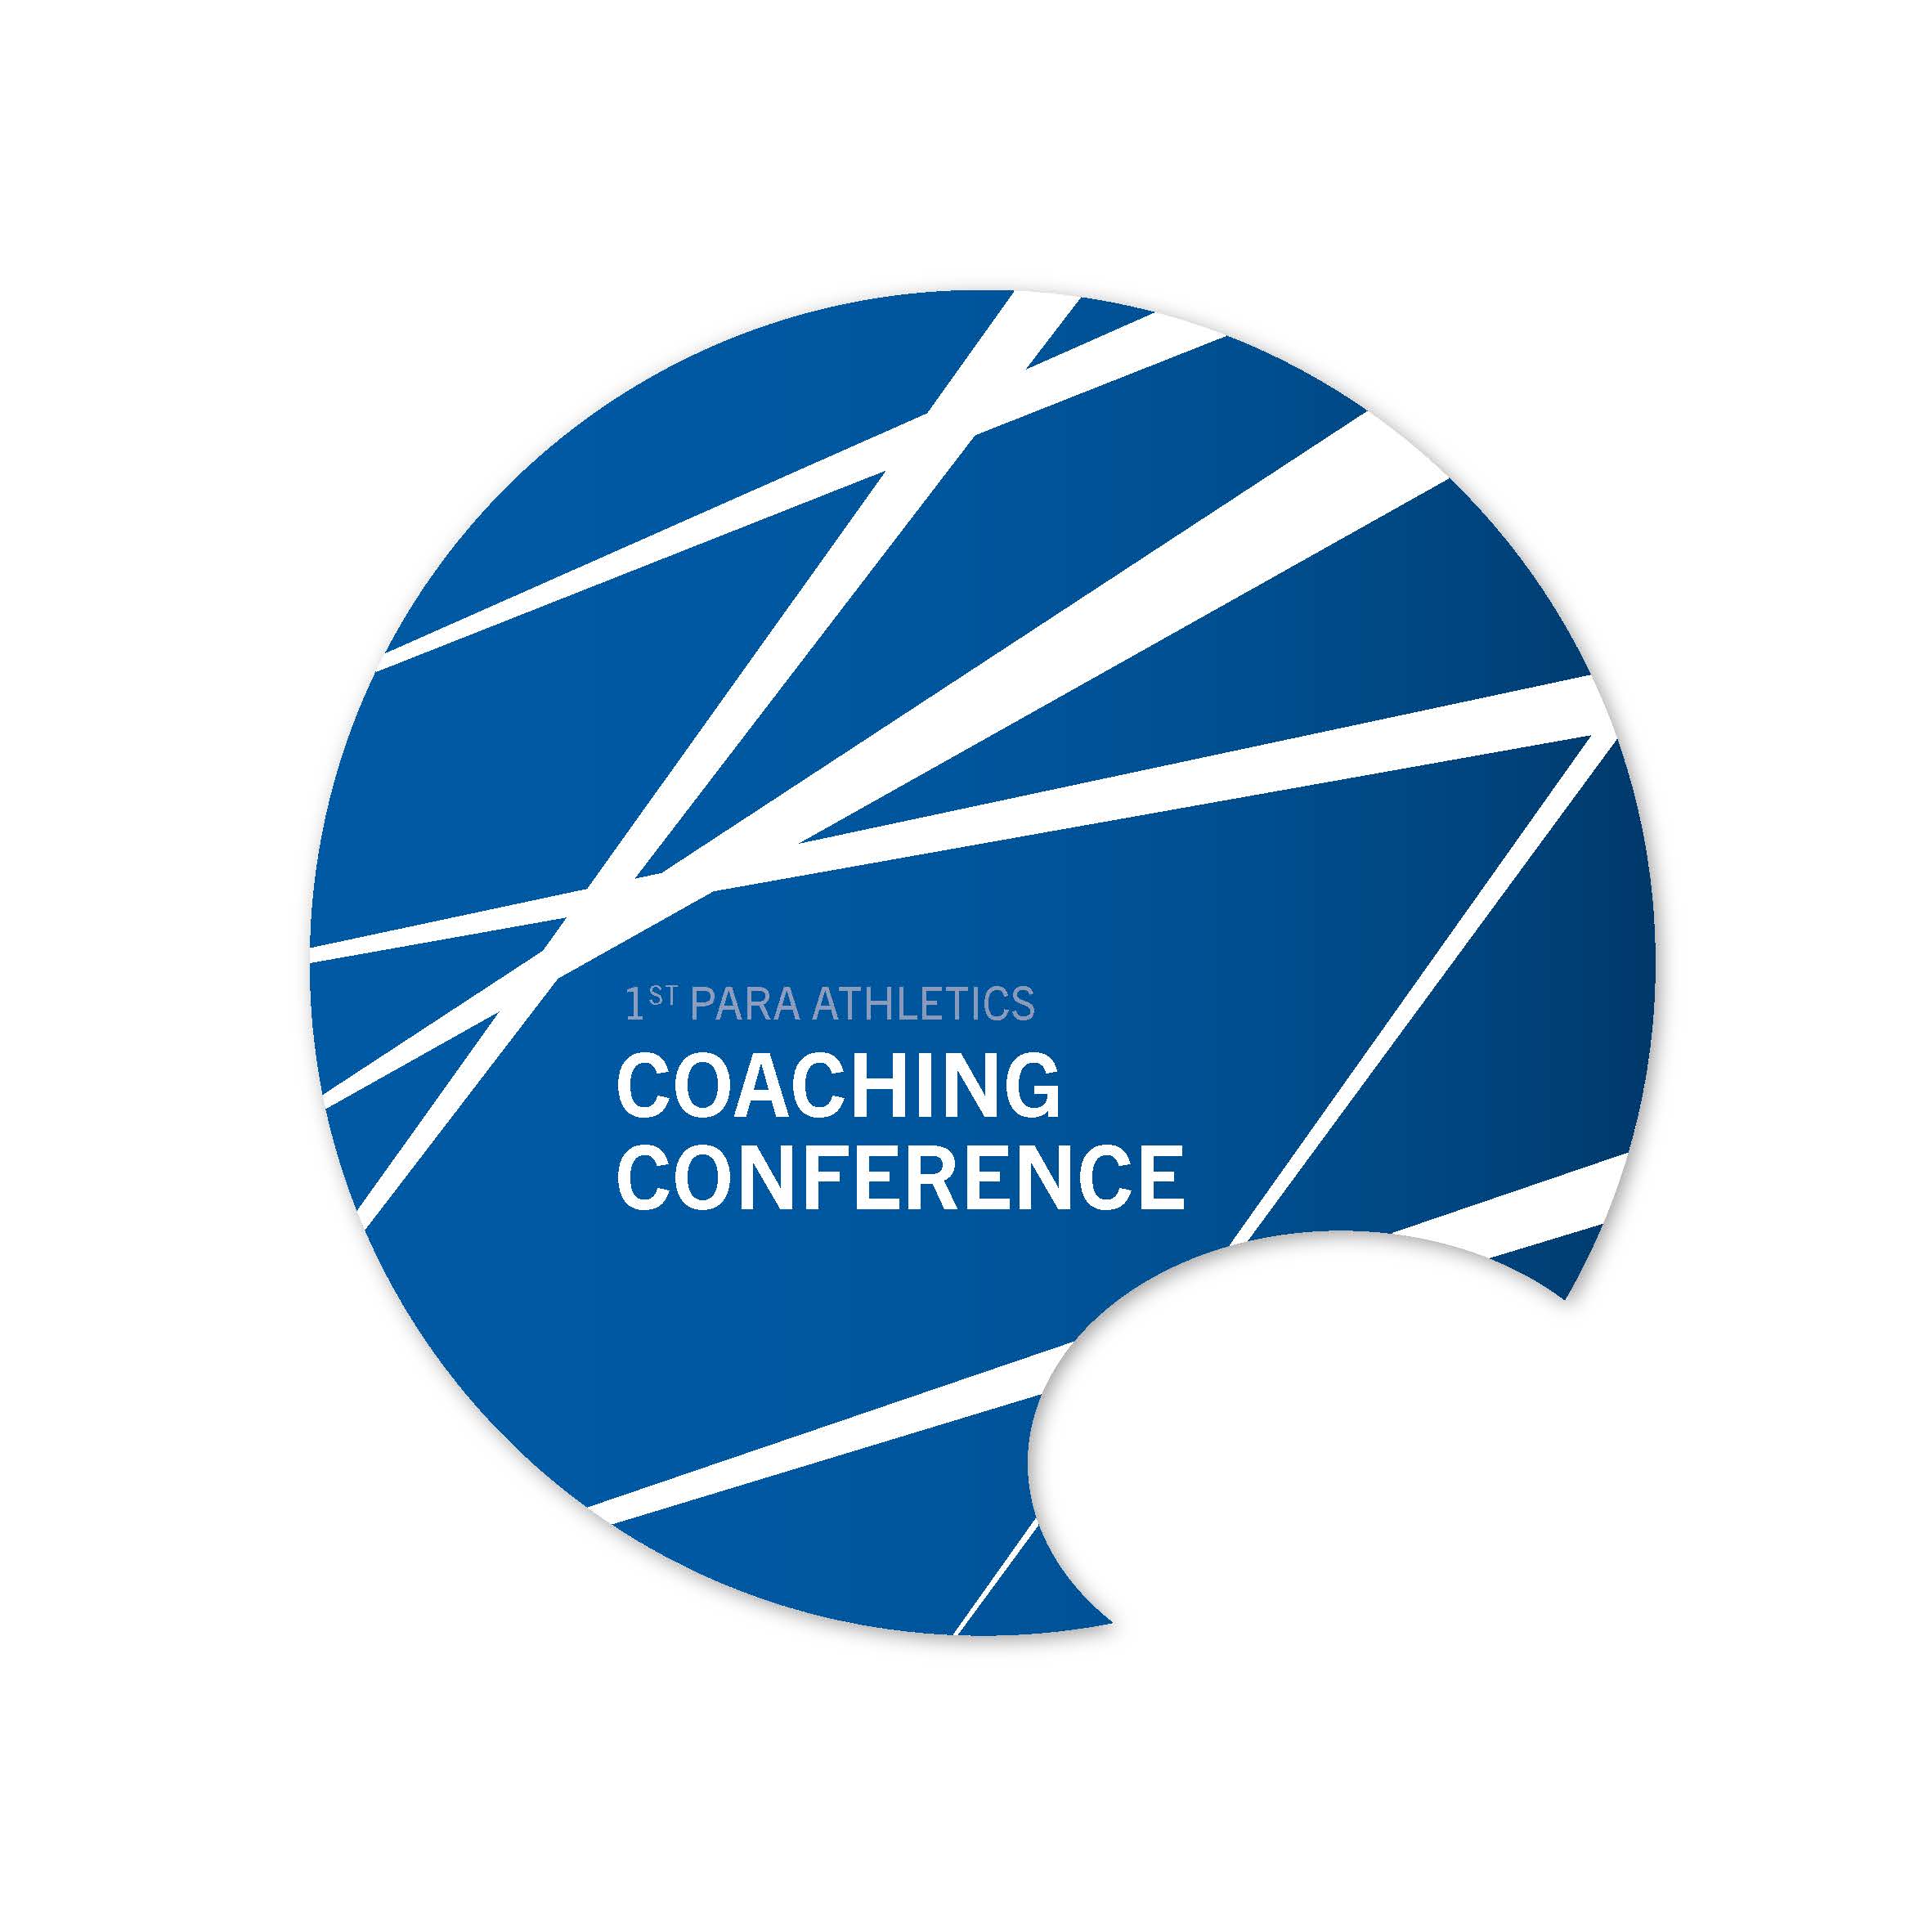 1st Para Athletics Coaching Conference logo